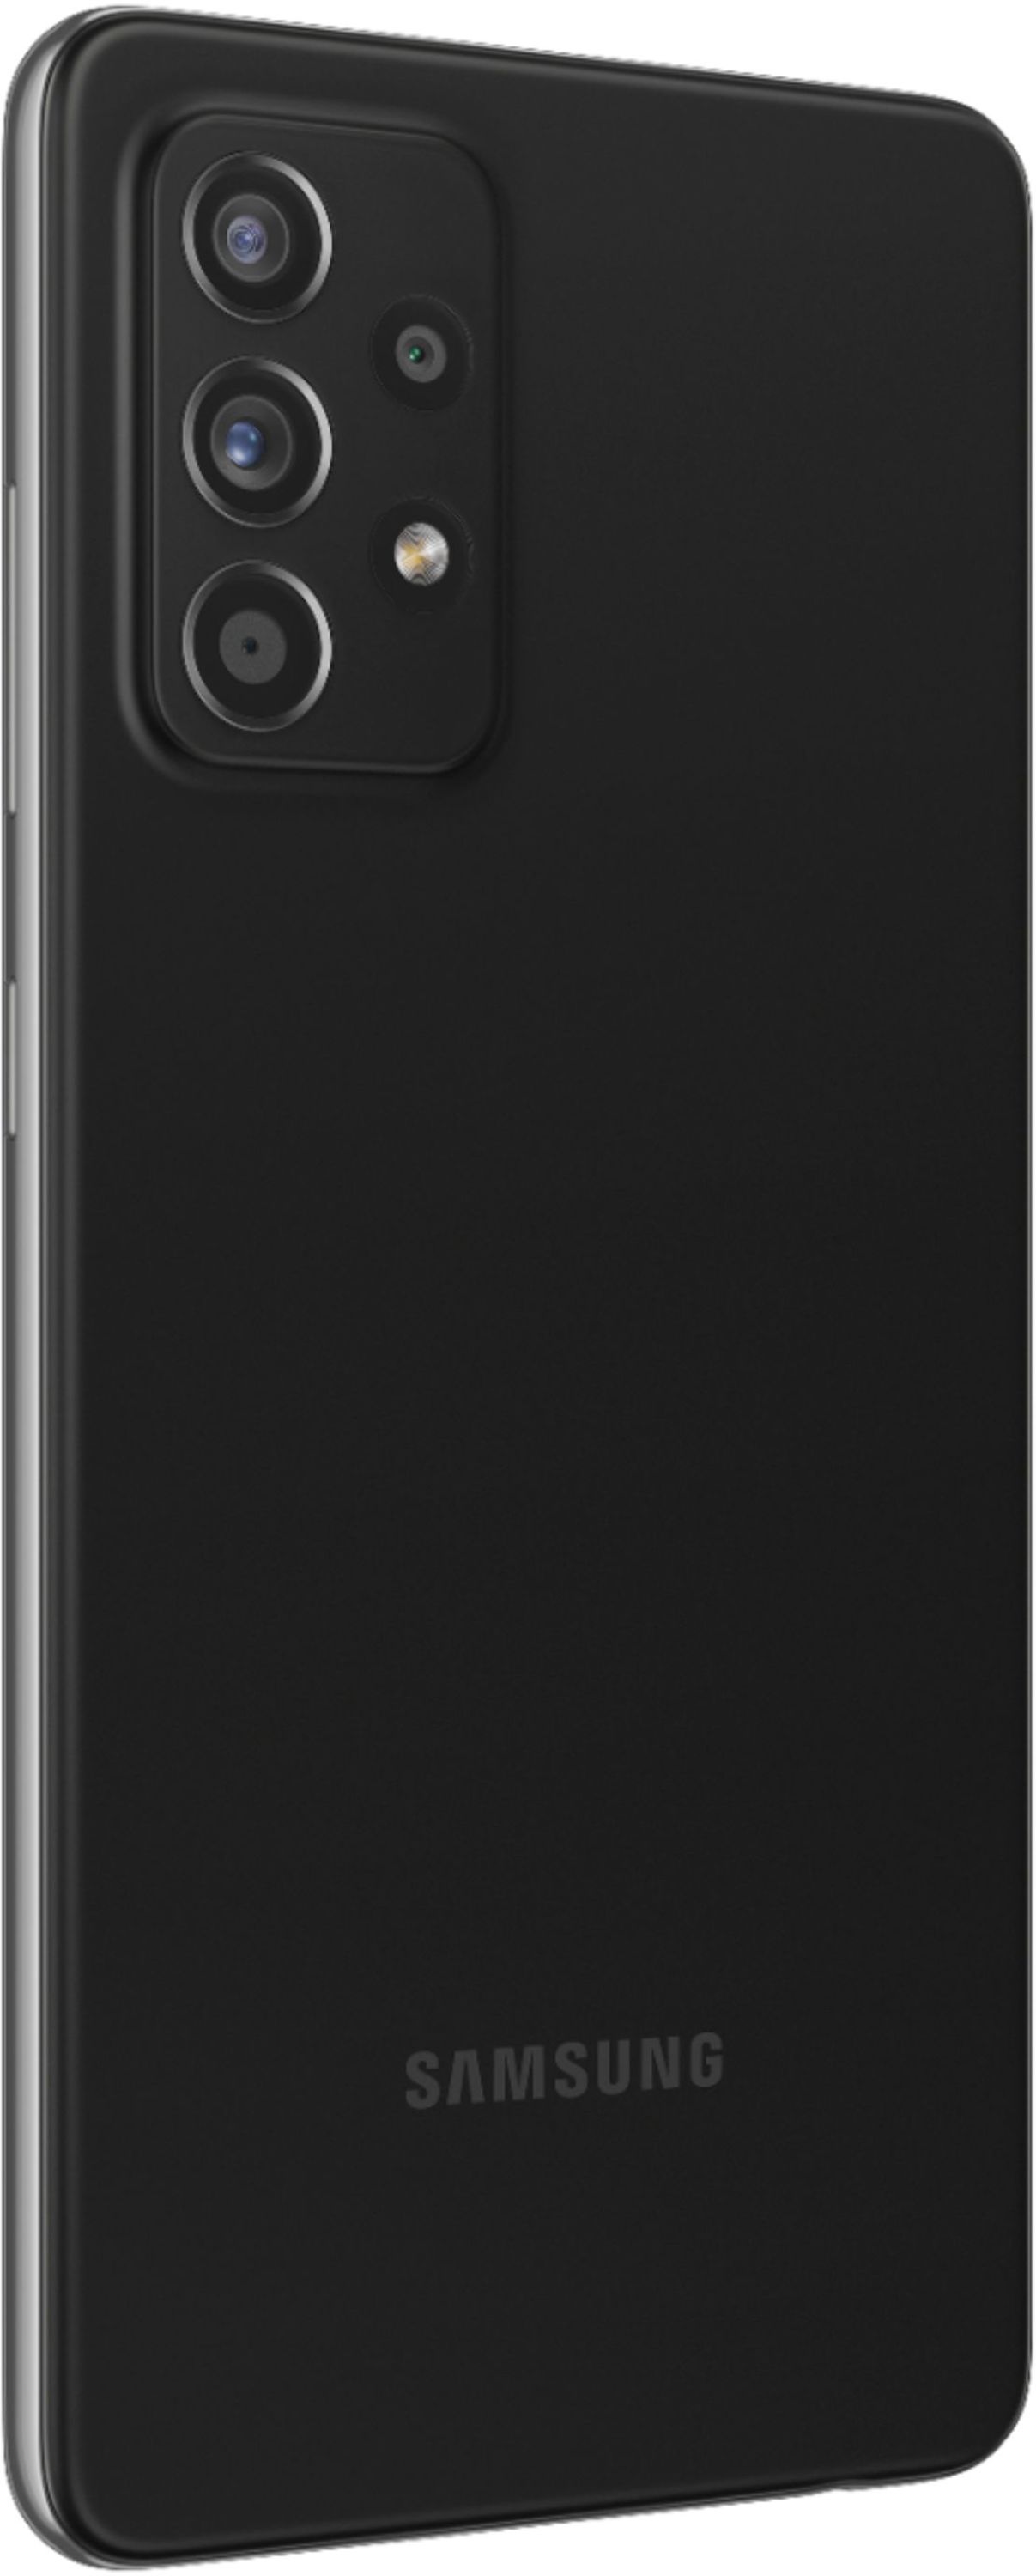 SAMSUNG Galaxy A52 5G A526U 128GB GSM / CDMA Unlocked Android Smartphone (US Version) - Awesome Black - image 1 of 6